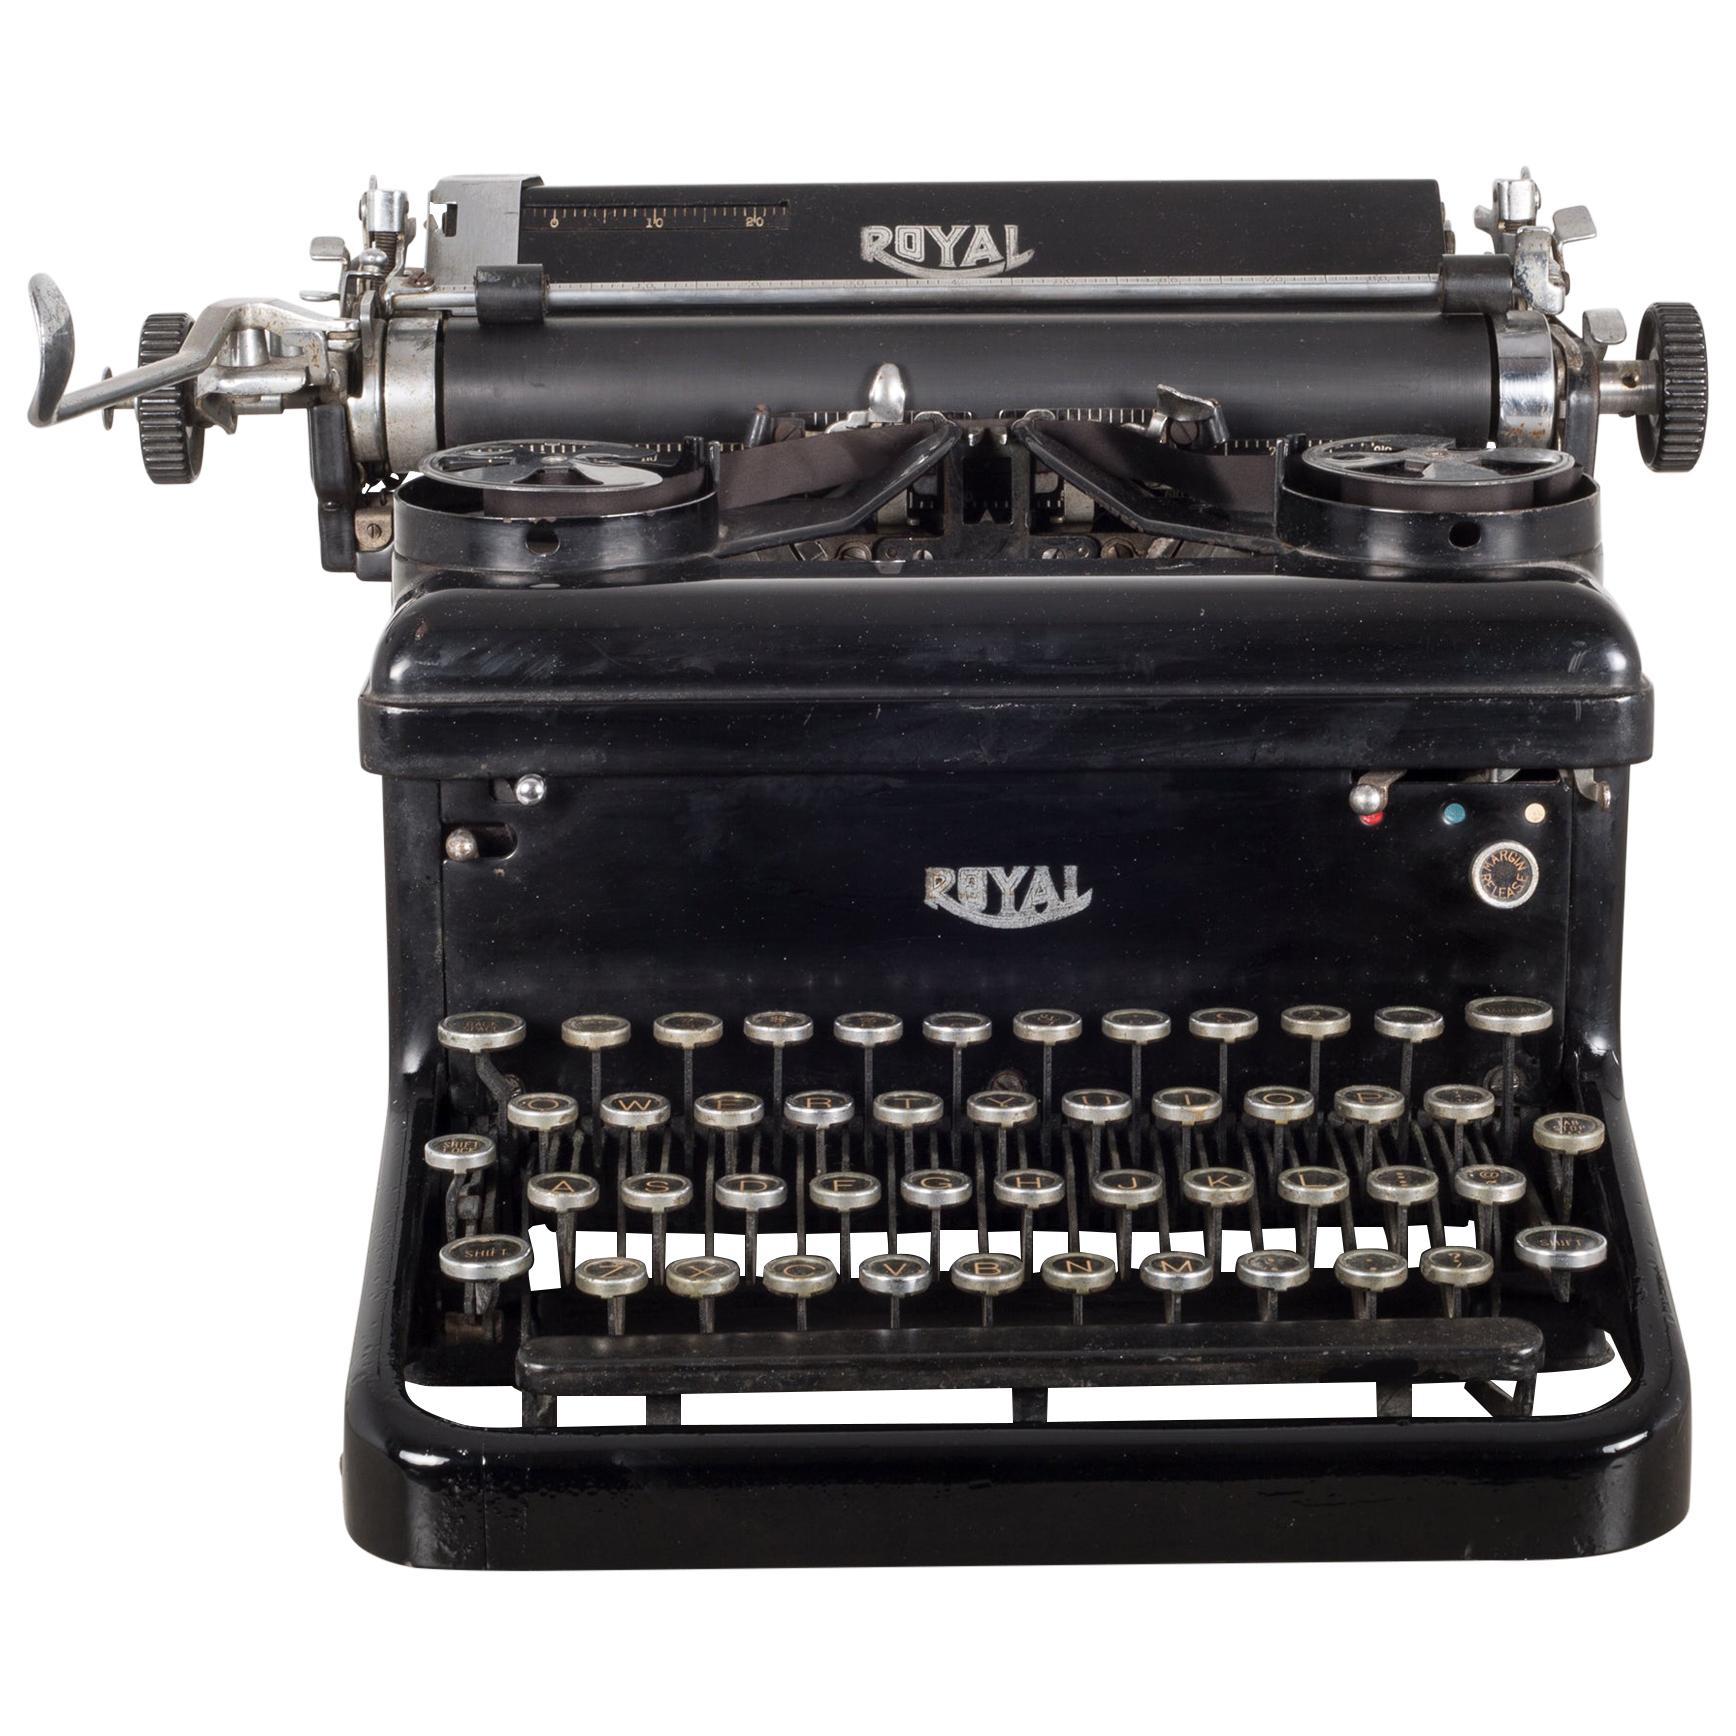 Antique Royal Touch Control Typewriter, circa 1930s